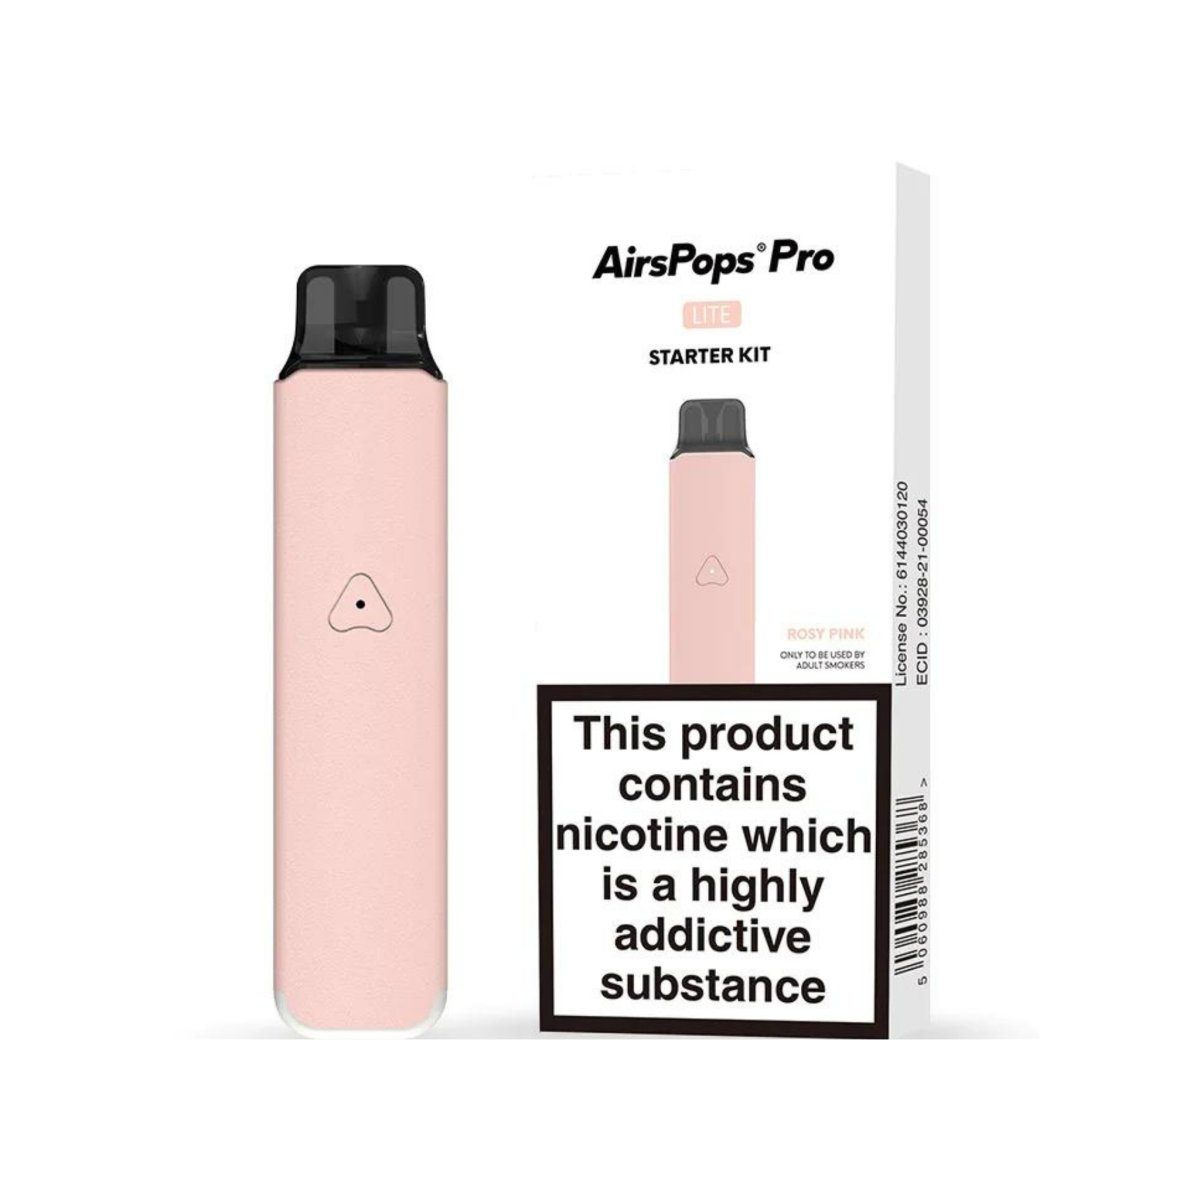 Rosy Pink Airscream Pro LITE Device Starter Kit | Airscream AirsPops | Shop Buy Online | Cape Town, Joburg, Durban, South Africa